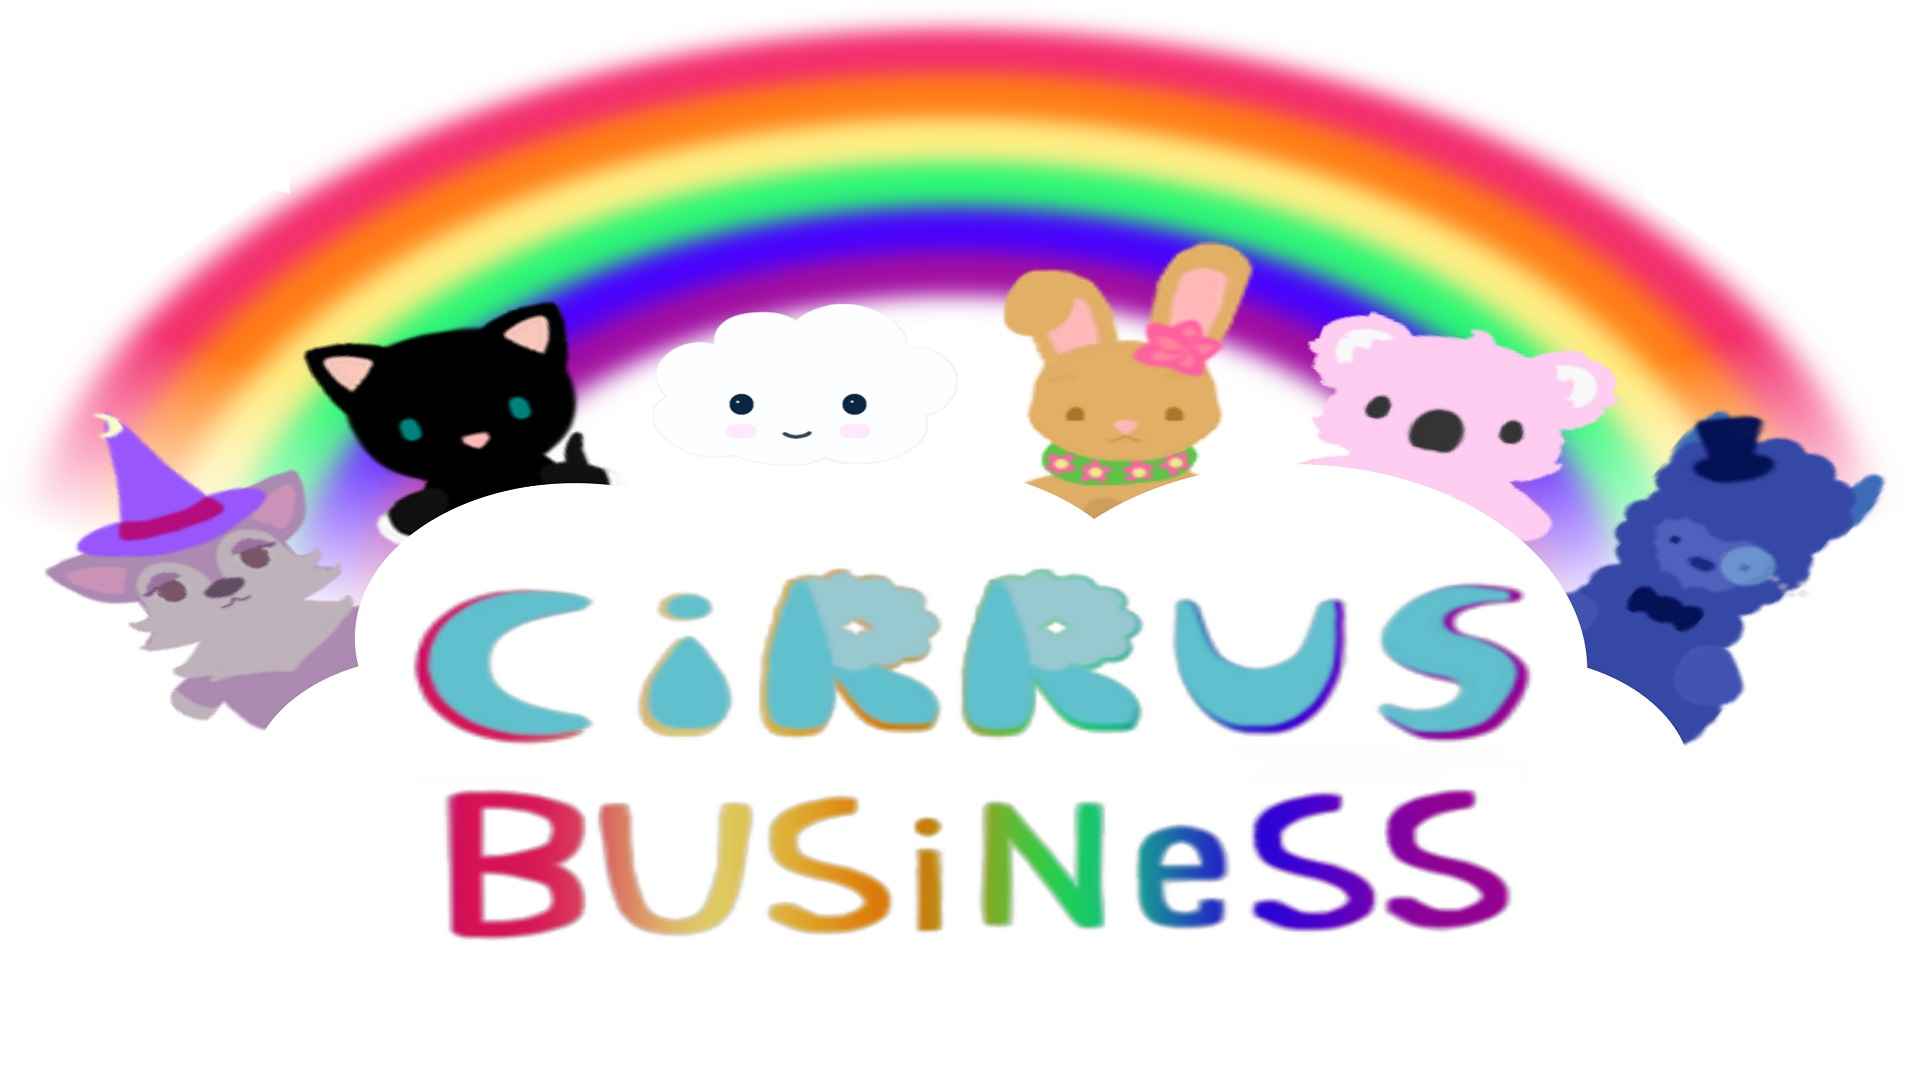 Cirrus Business